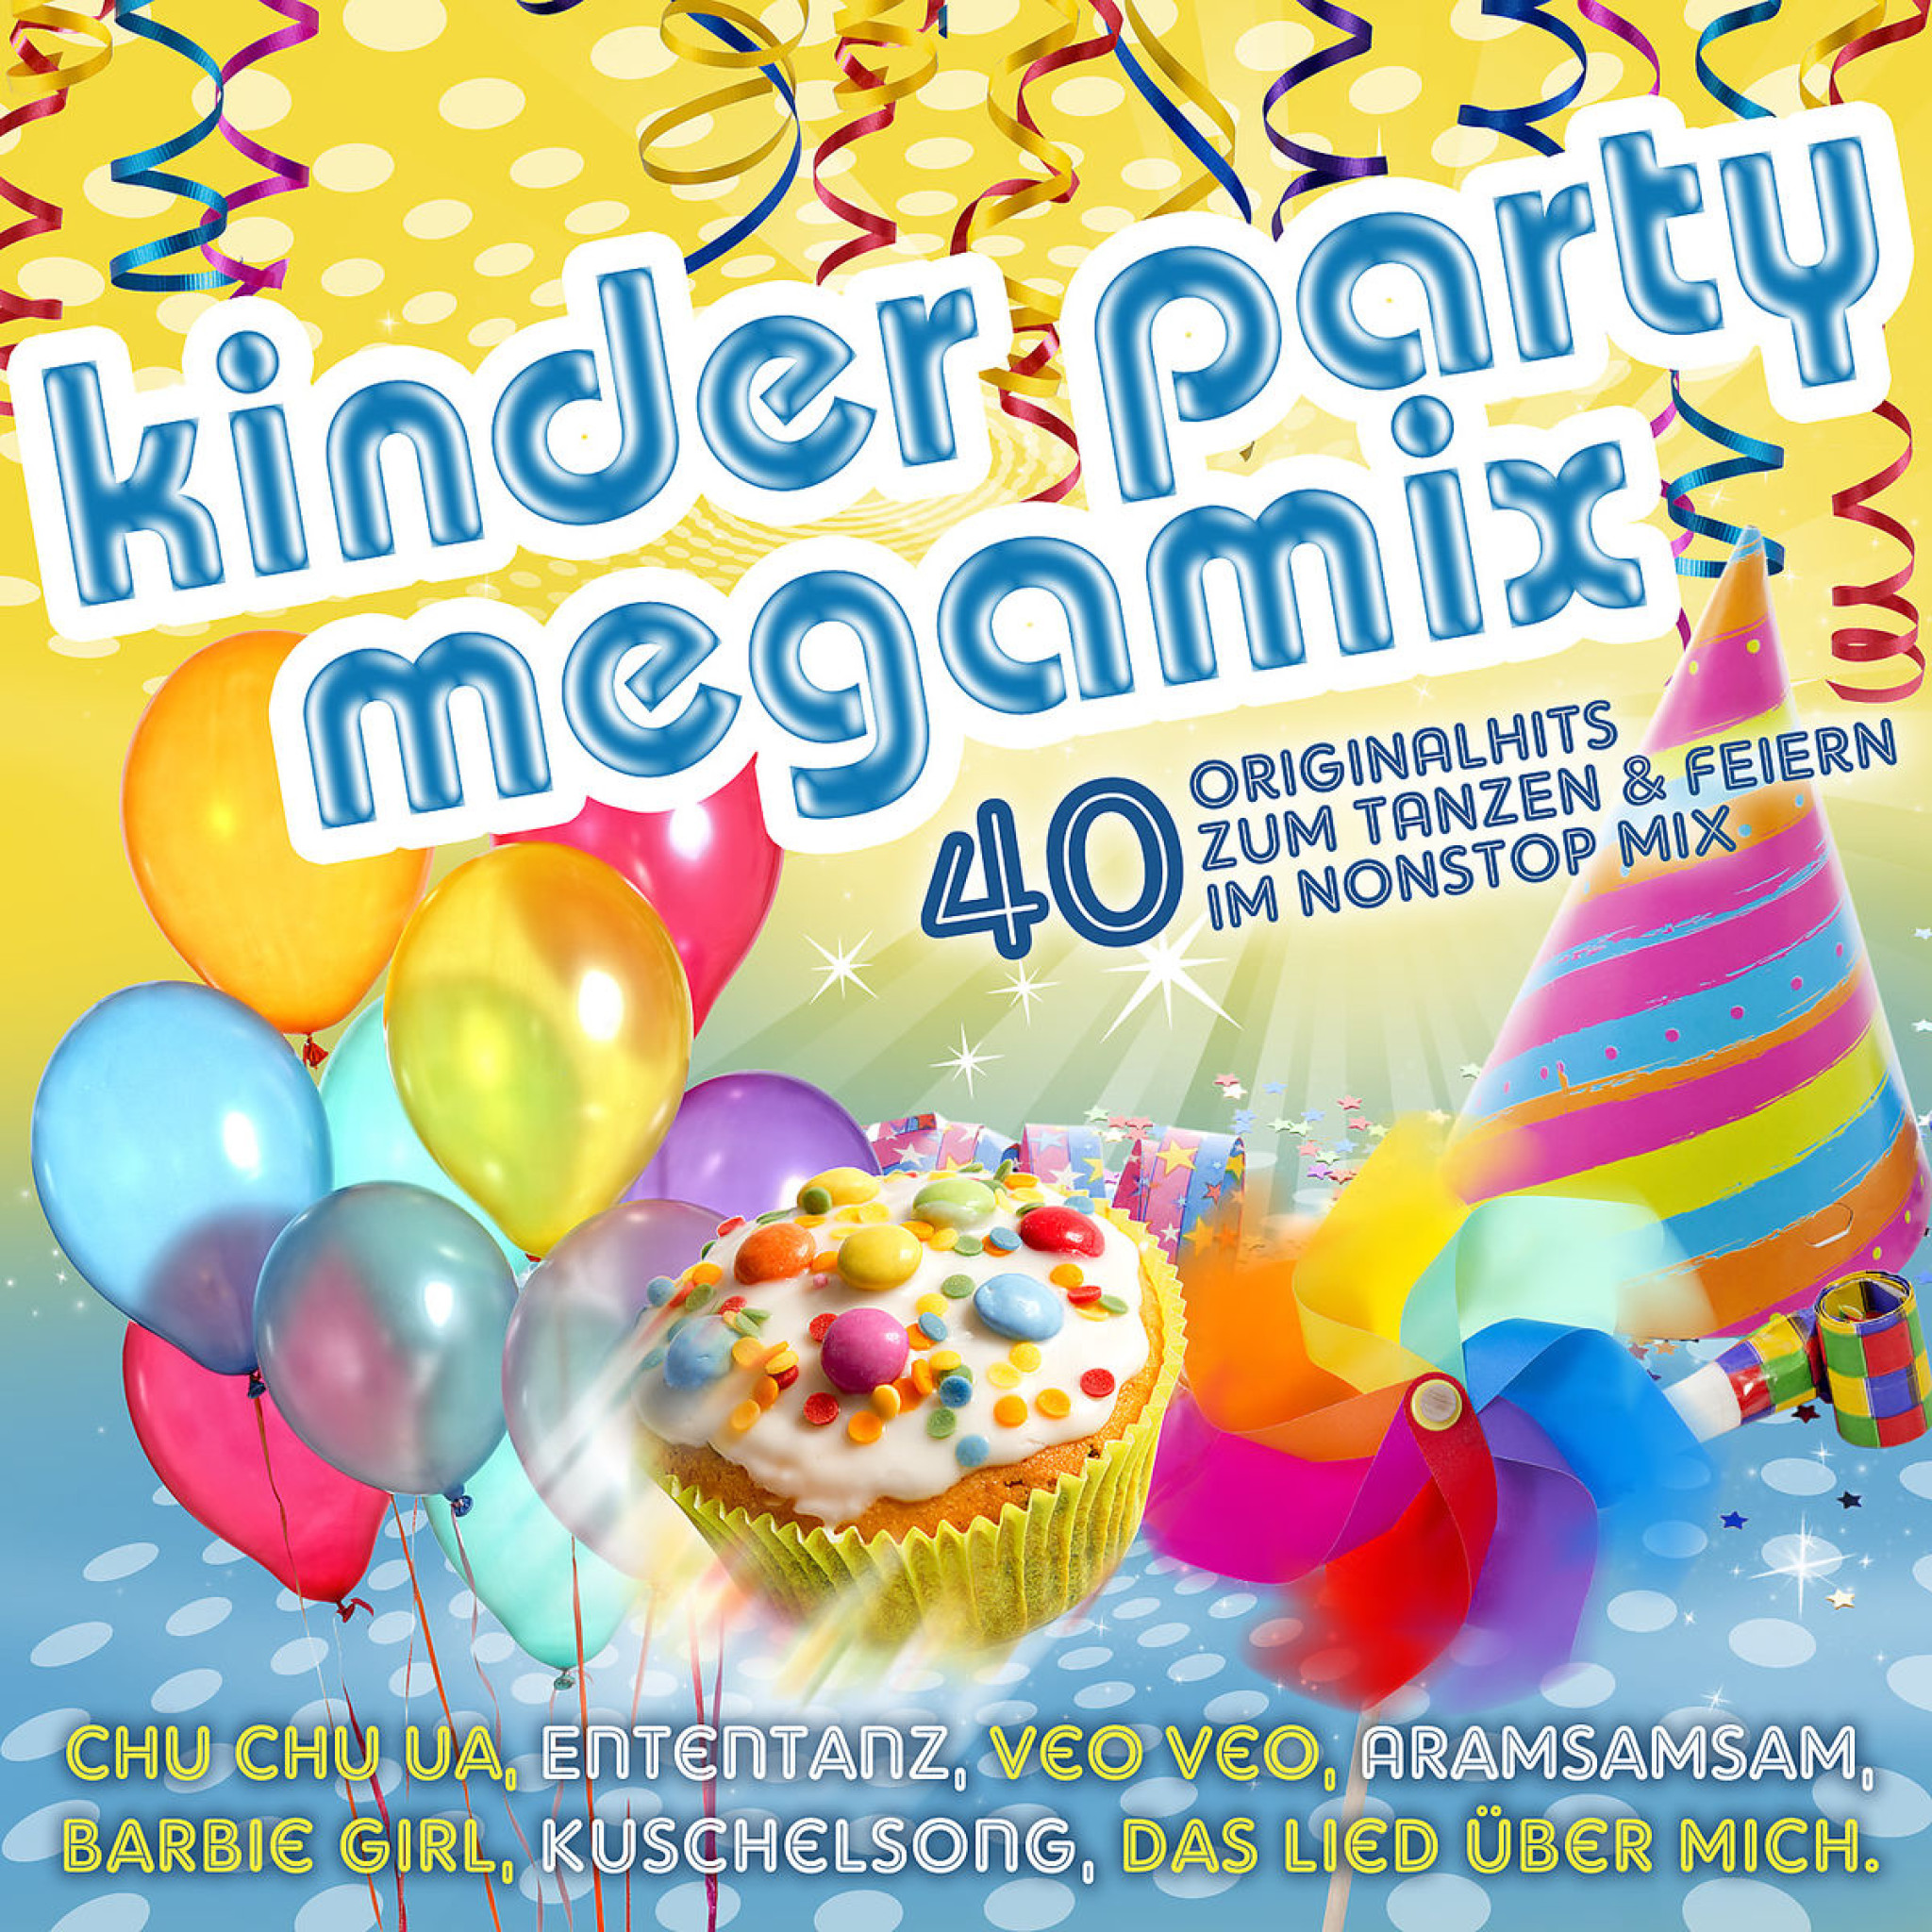 Kinder Party Megamix